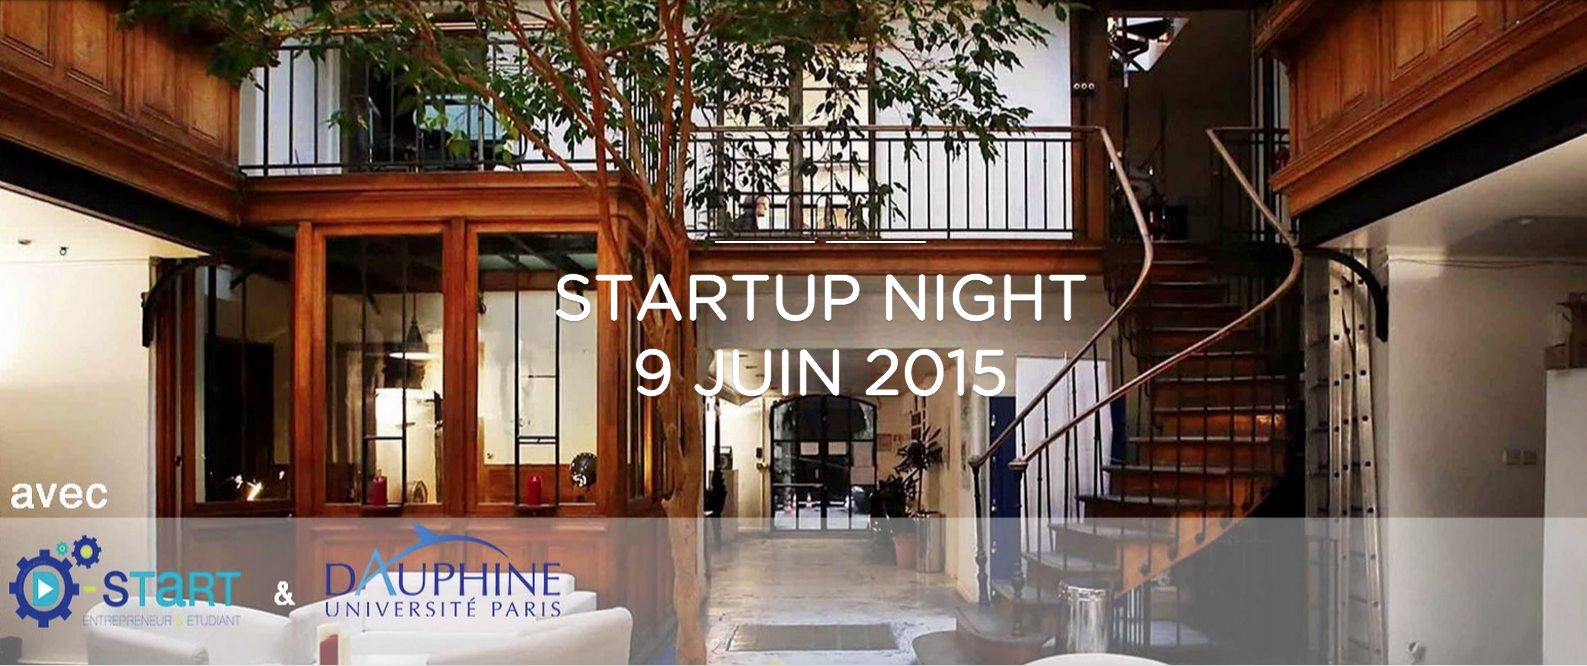 Startup Night 50 partners